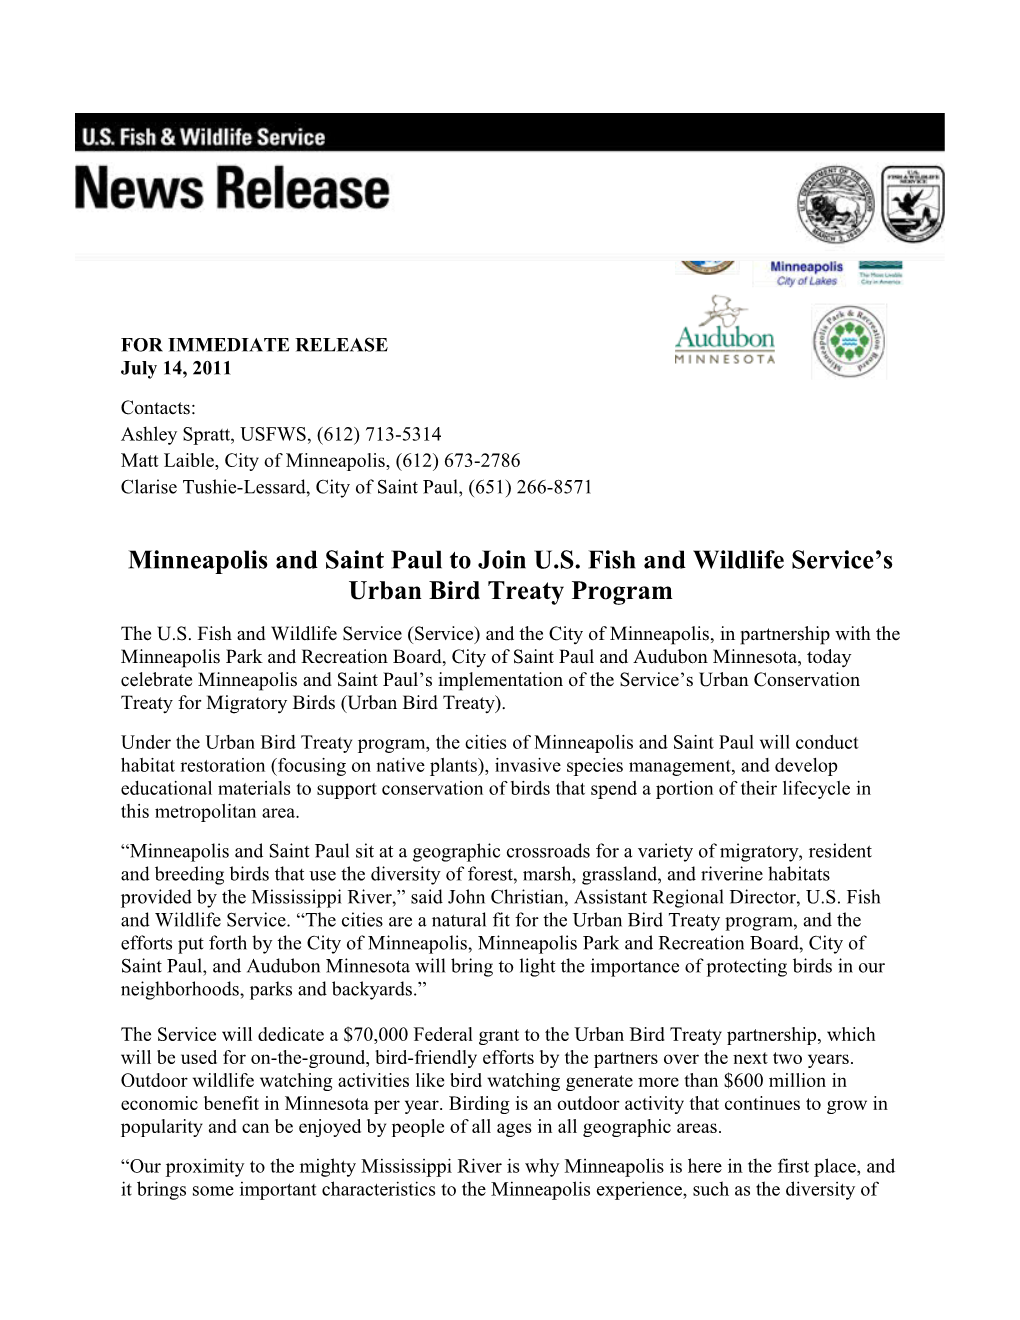 Minneapolis and Saint Paul to Join U.S. Fish and Wildlife Service S Urban Bird Treaty Program